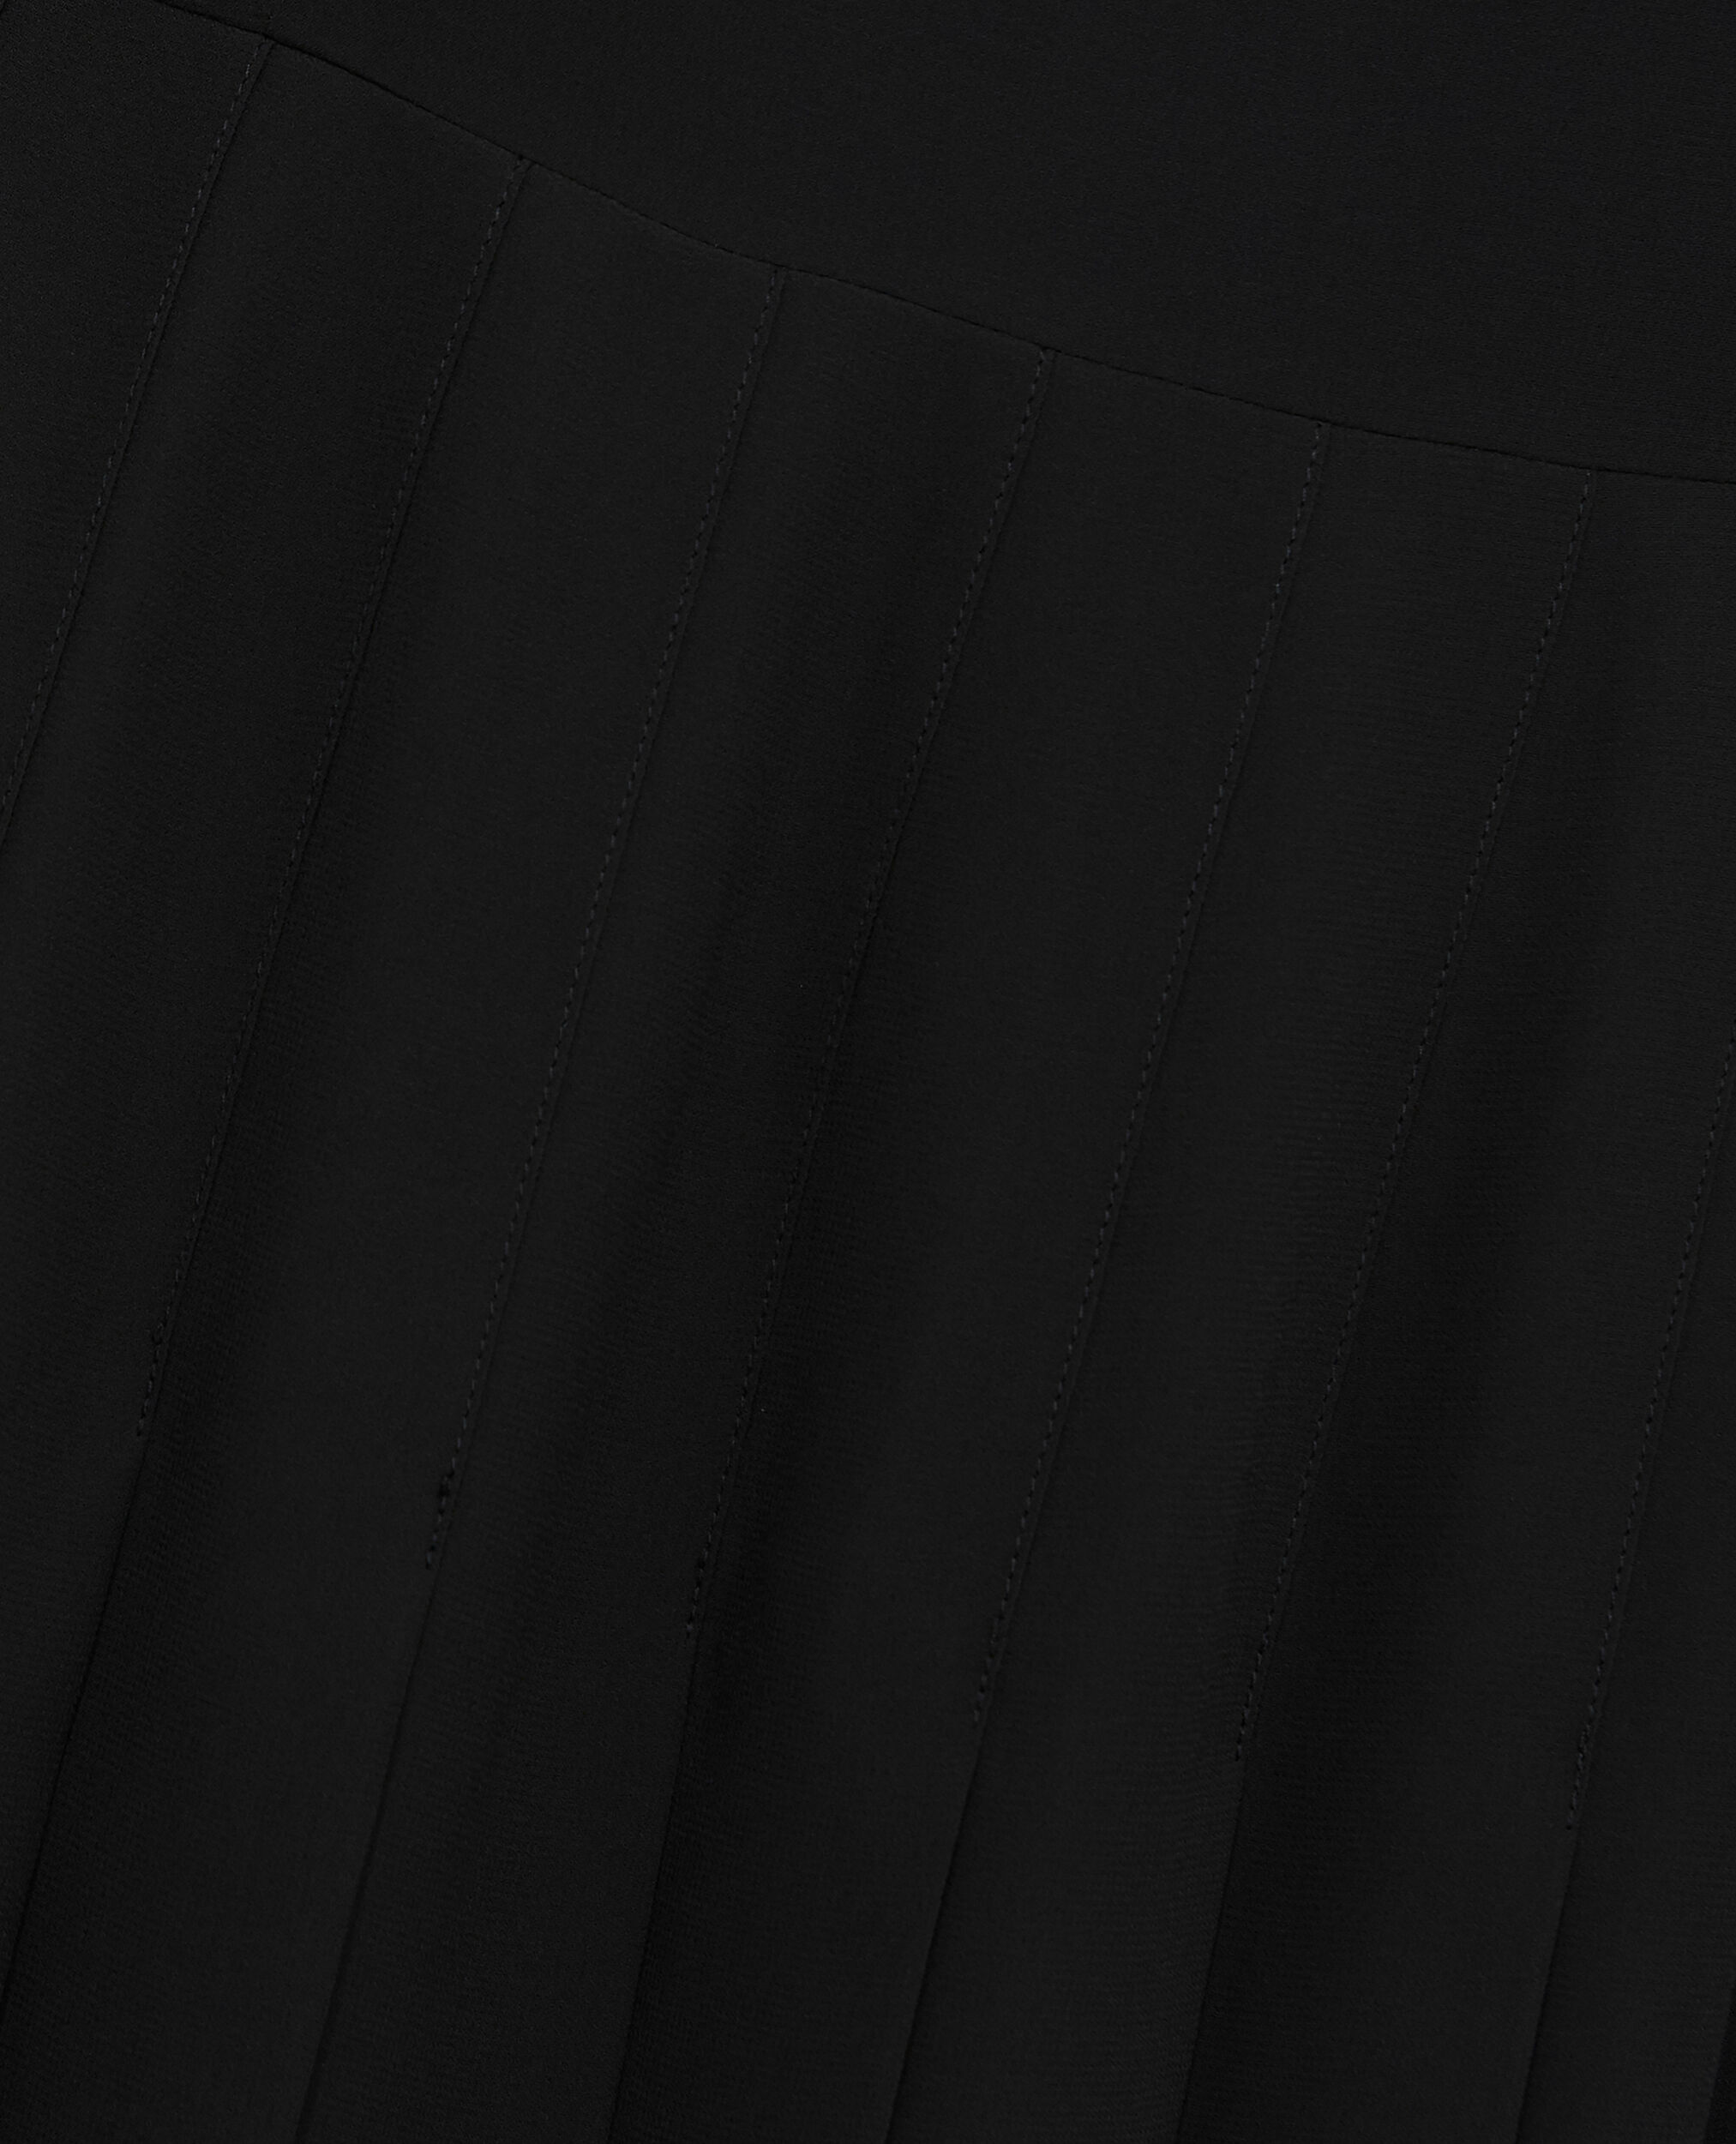 Kurzes Kleid schwarz plissiert Schulterknöpfe, BLACK, hi-res image number null